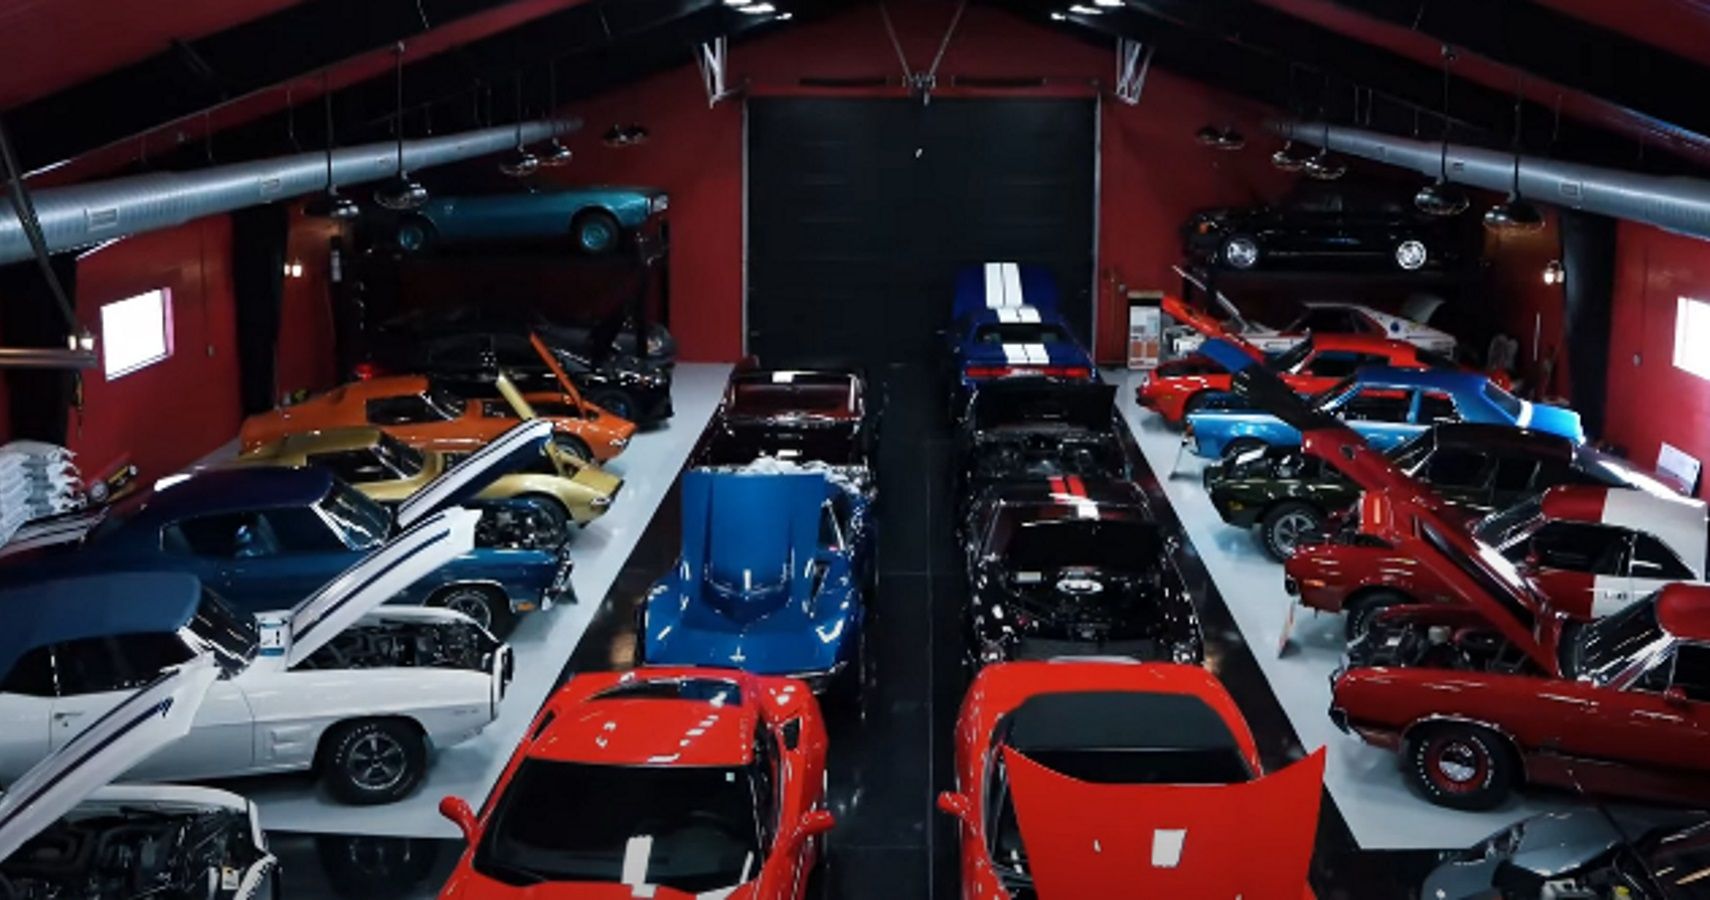 Dennis Collins Explores A Classic Muscle Car Collection